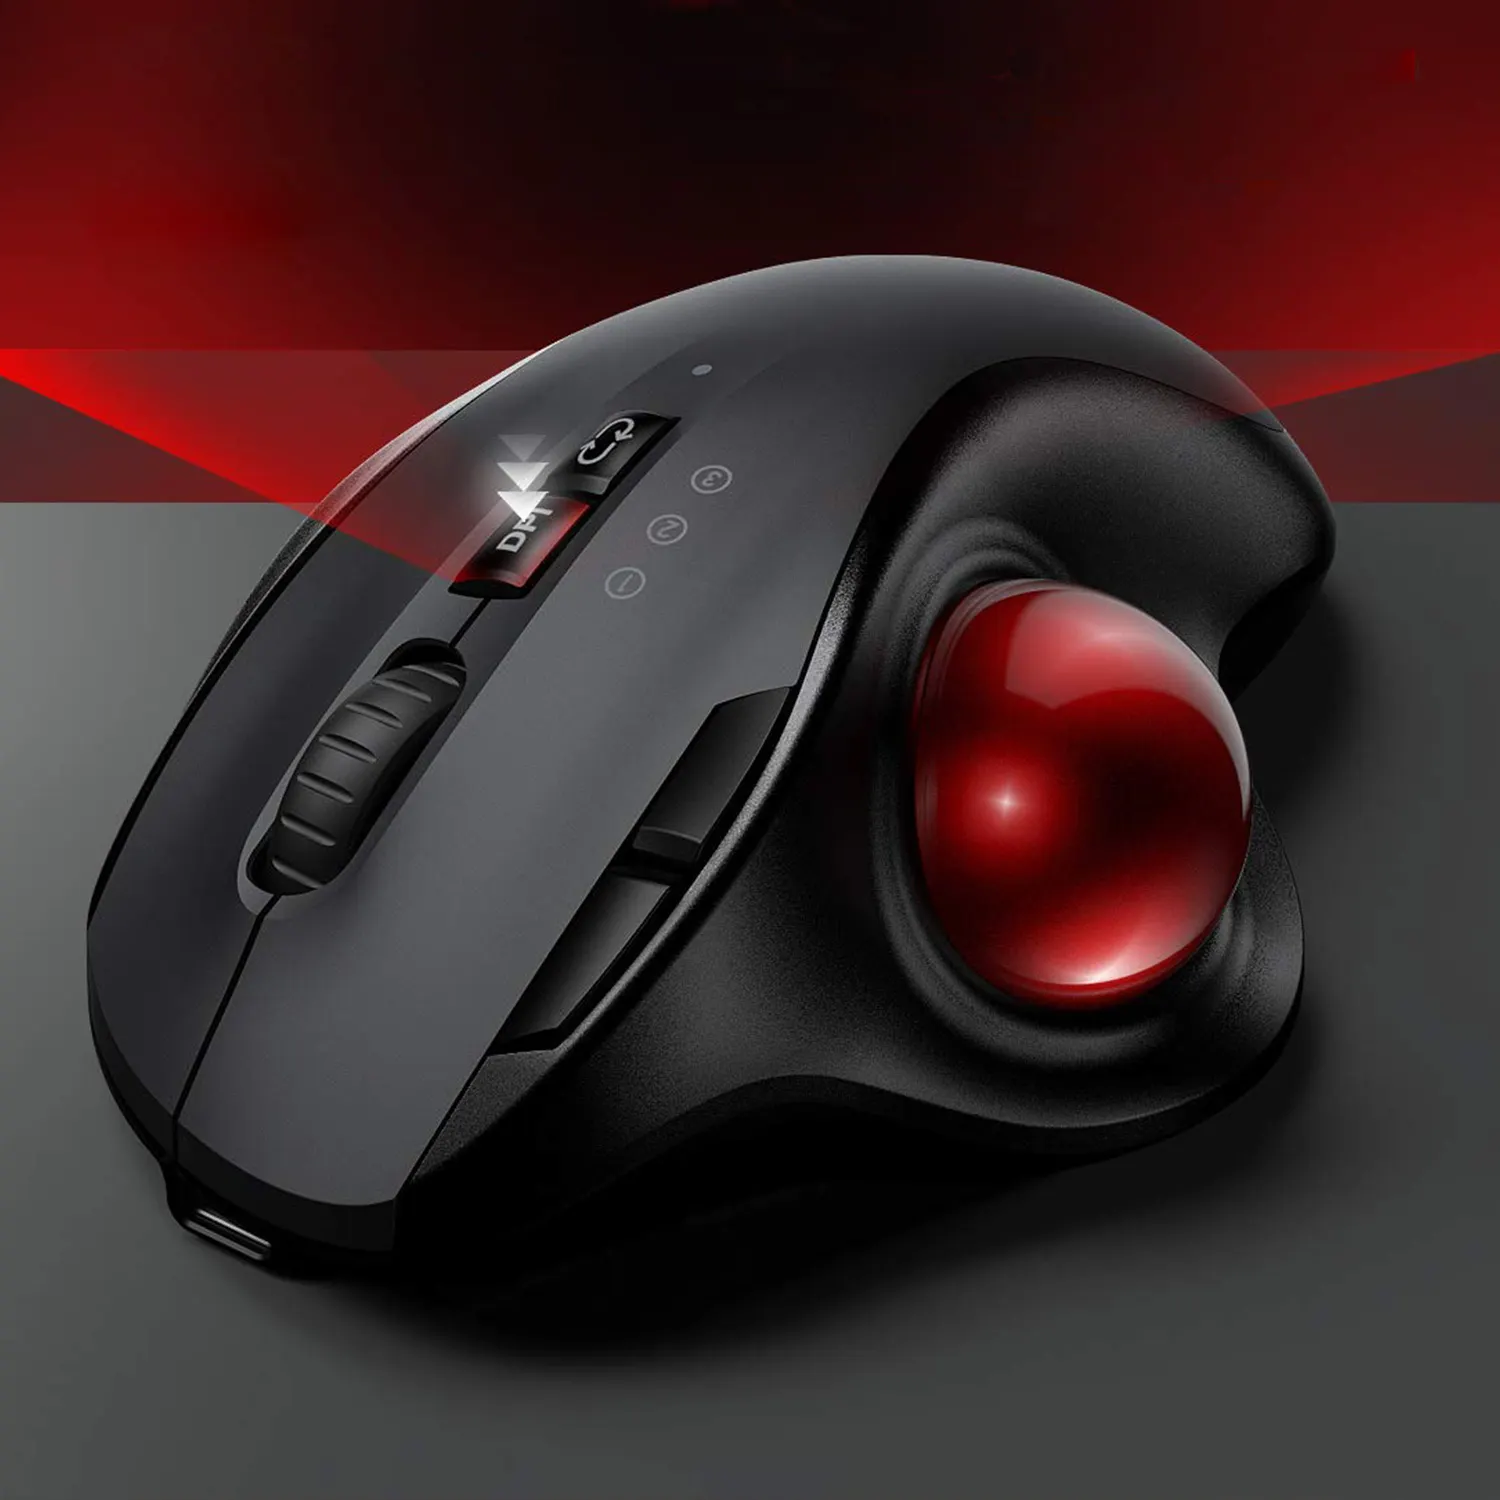 Seenda Rechargeable Rollerball BT Mice for Windows Mac iPad Android Ergonomic 2.4G Wireless Trackball Mouse